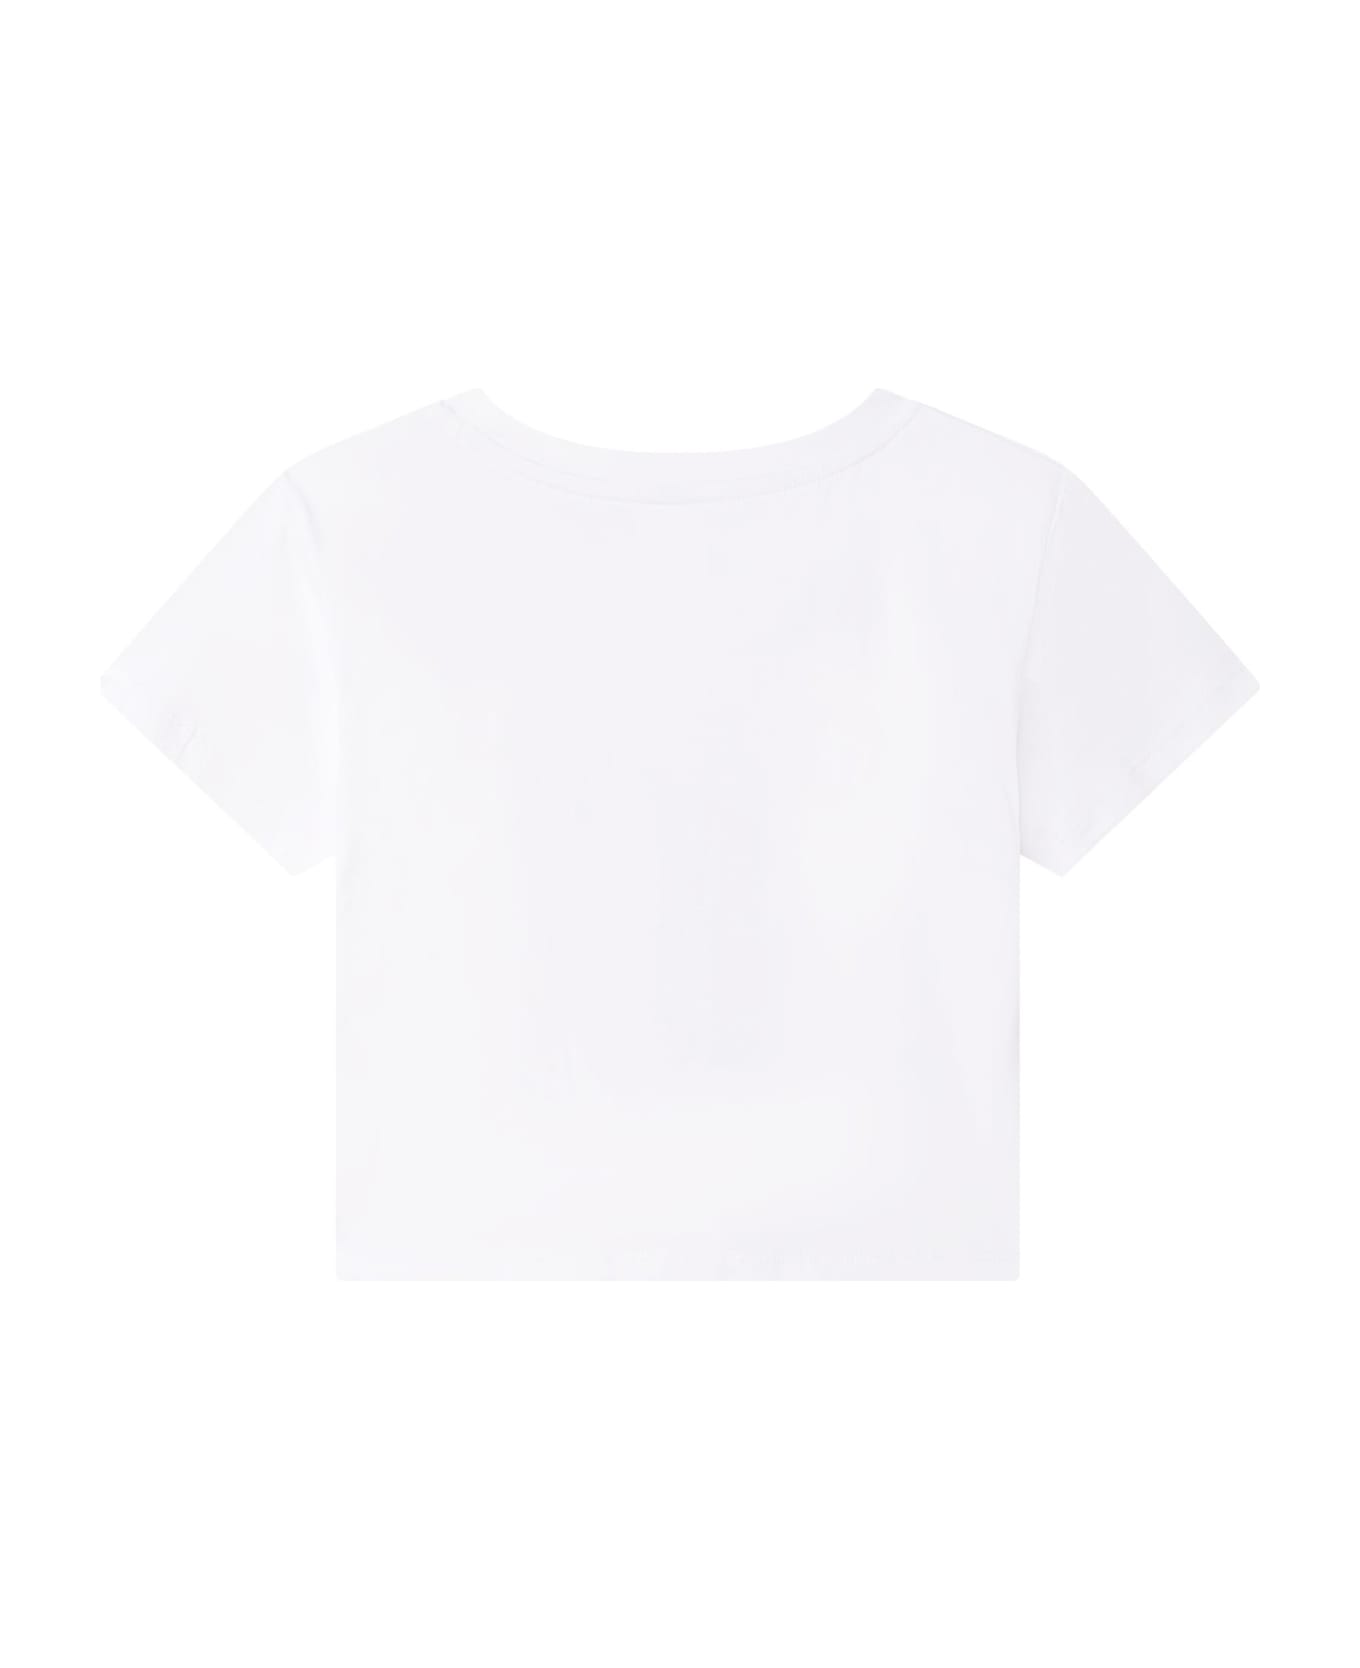 Michael Kors Logo T-shirt - White